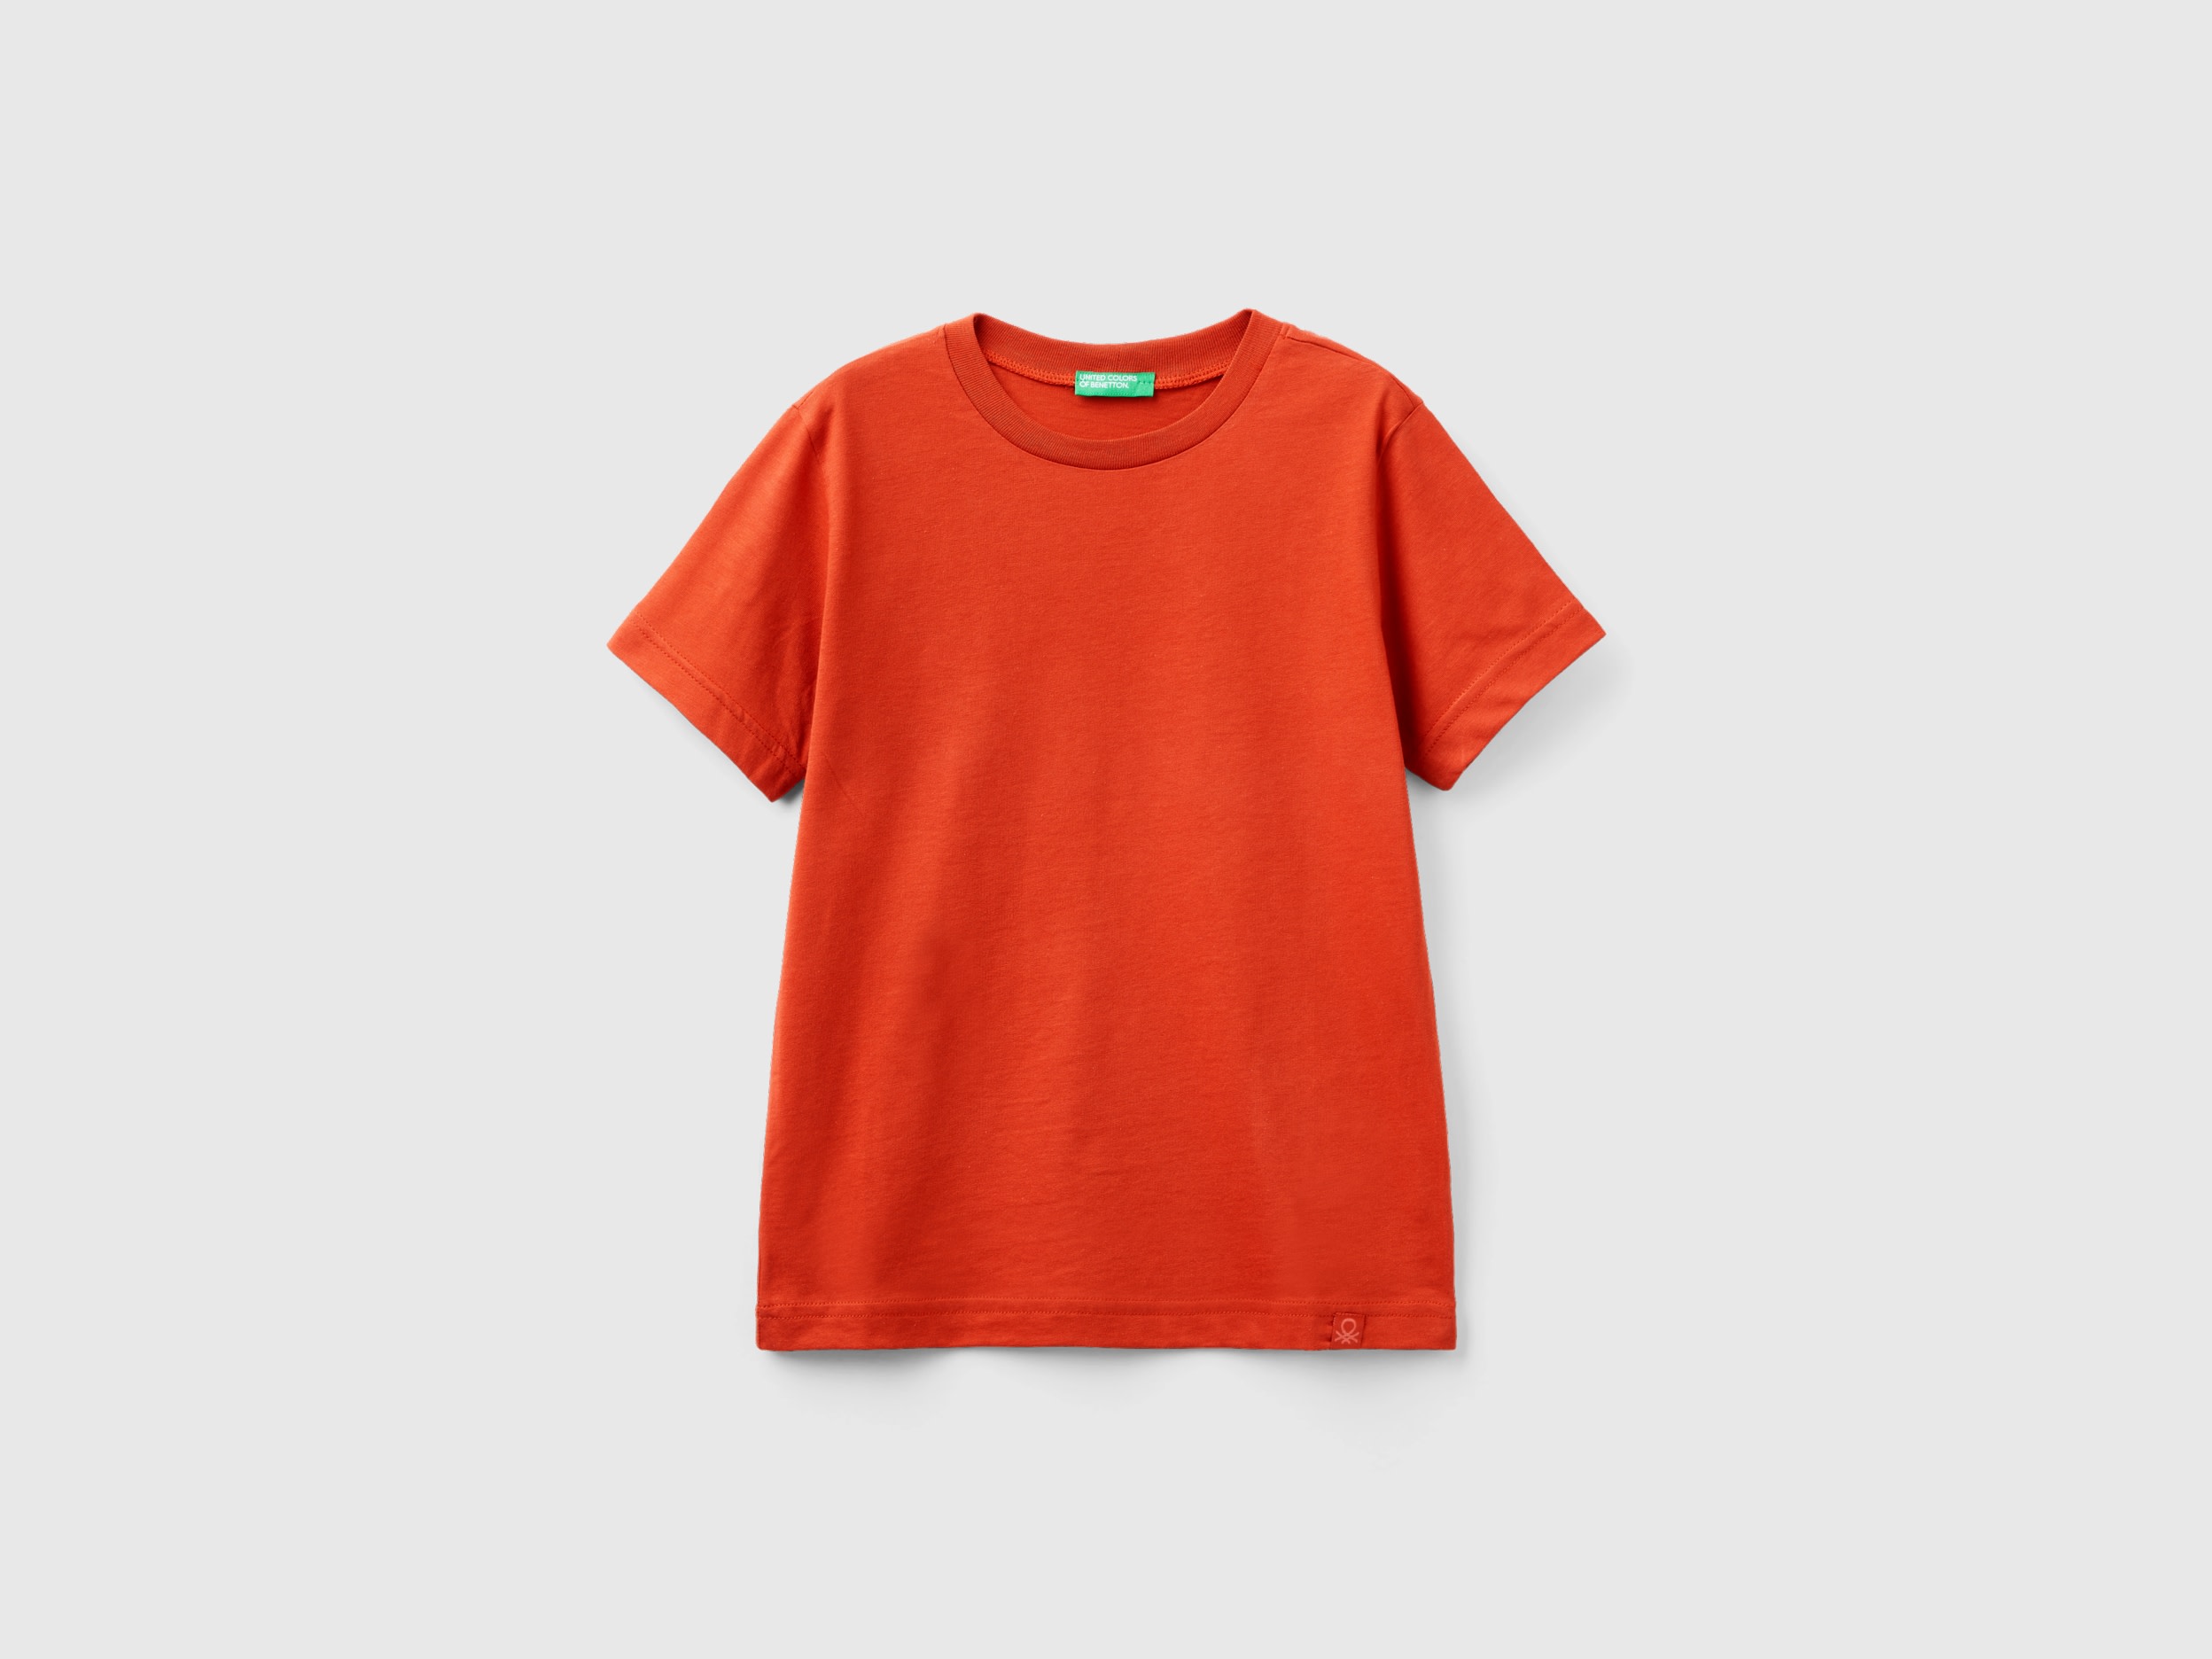 Benetton, Organic Cotton T-shirt, size 3XL, Brick Red, Kids